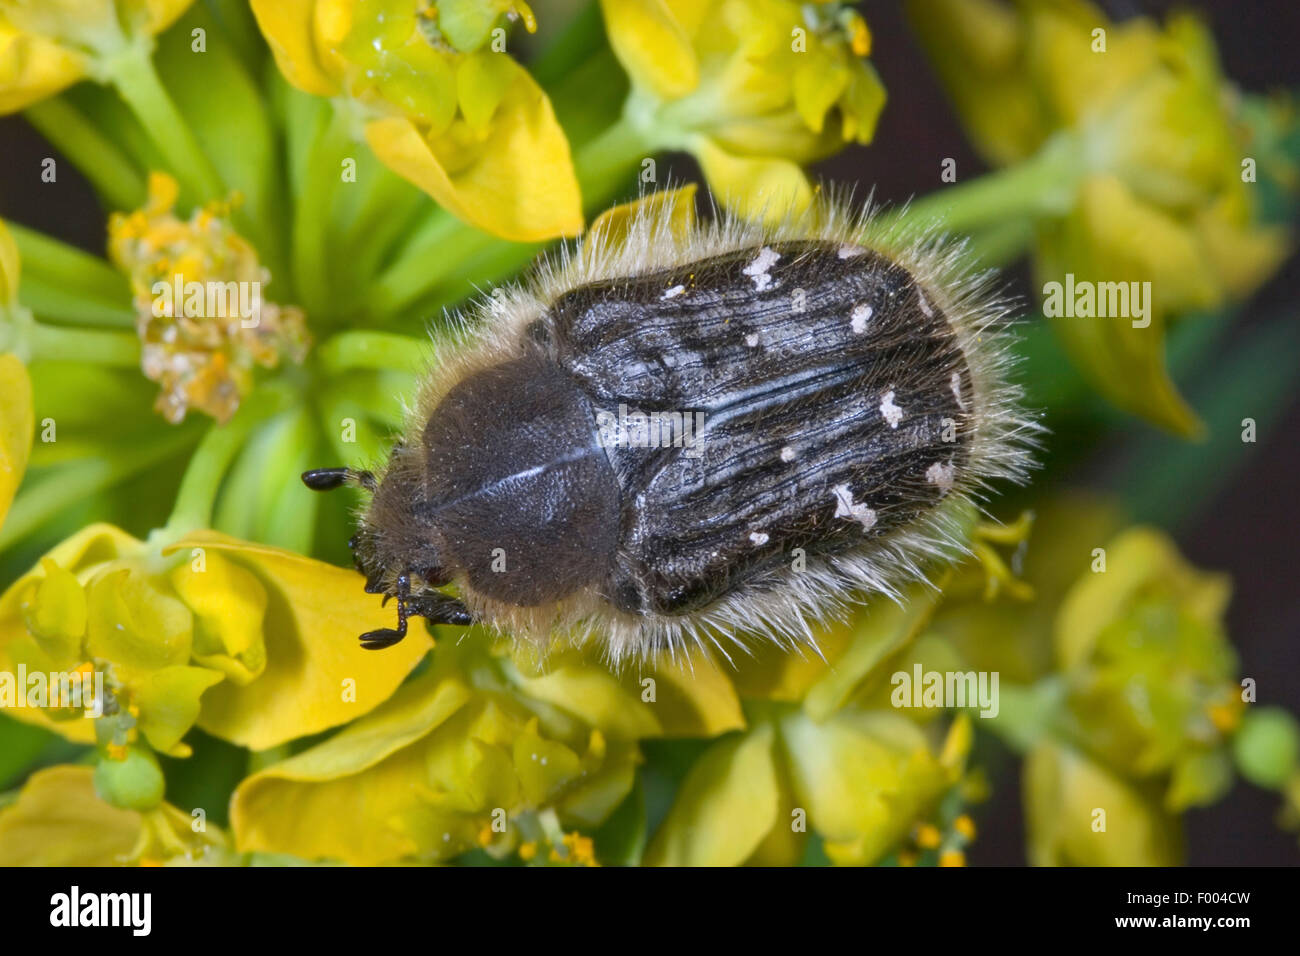 Hairy beetle, Apple blossom beetle (Tropinota hirta, Epicometis hirta), on yellow flowers, Germany Stock Photo